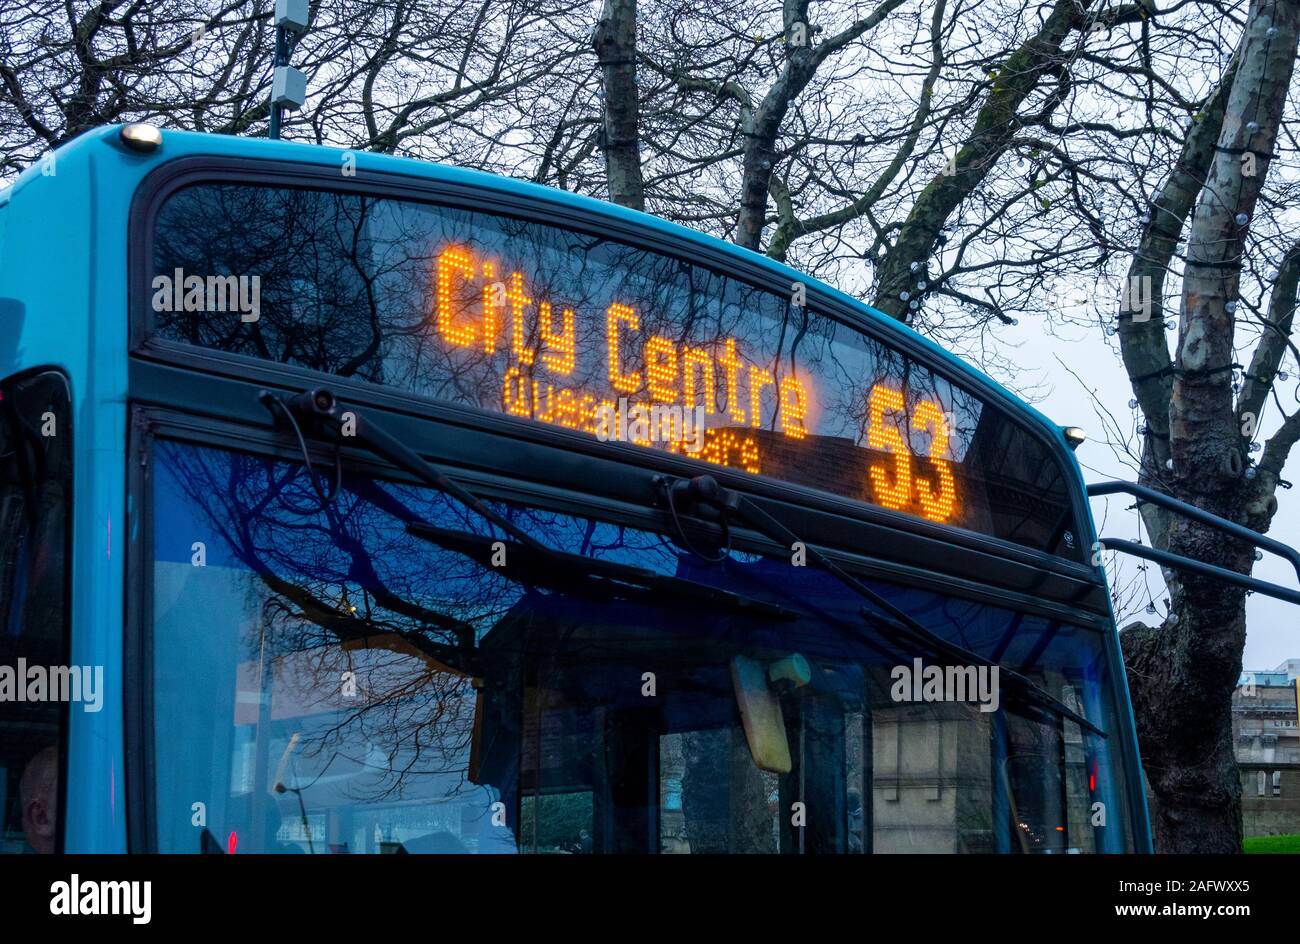 A No. 53 Bus in Liverpool City Centre Stock Photo